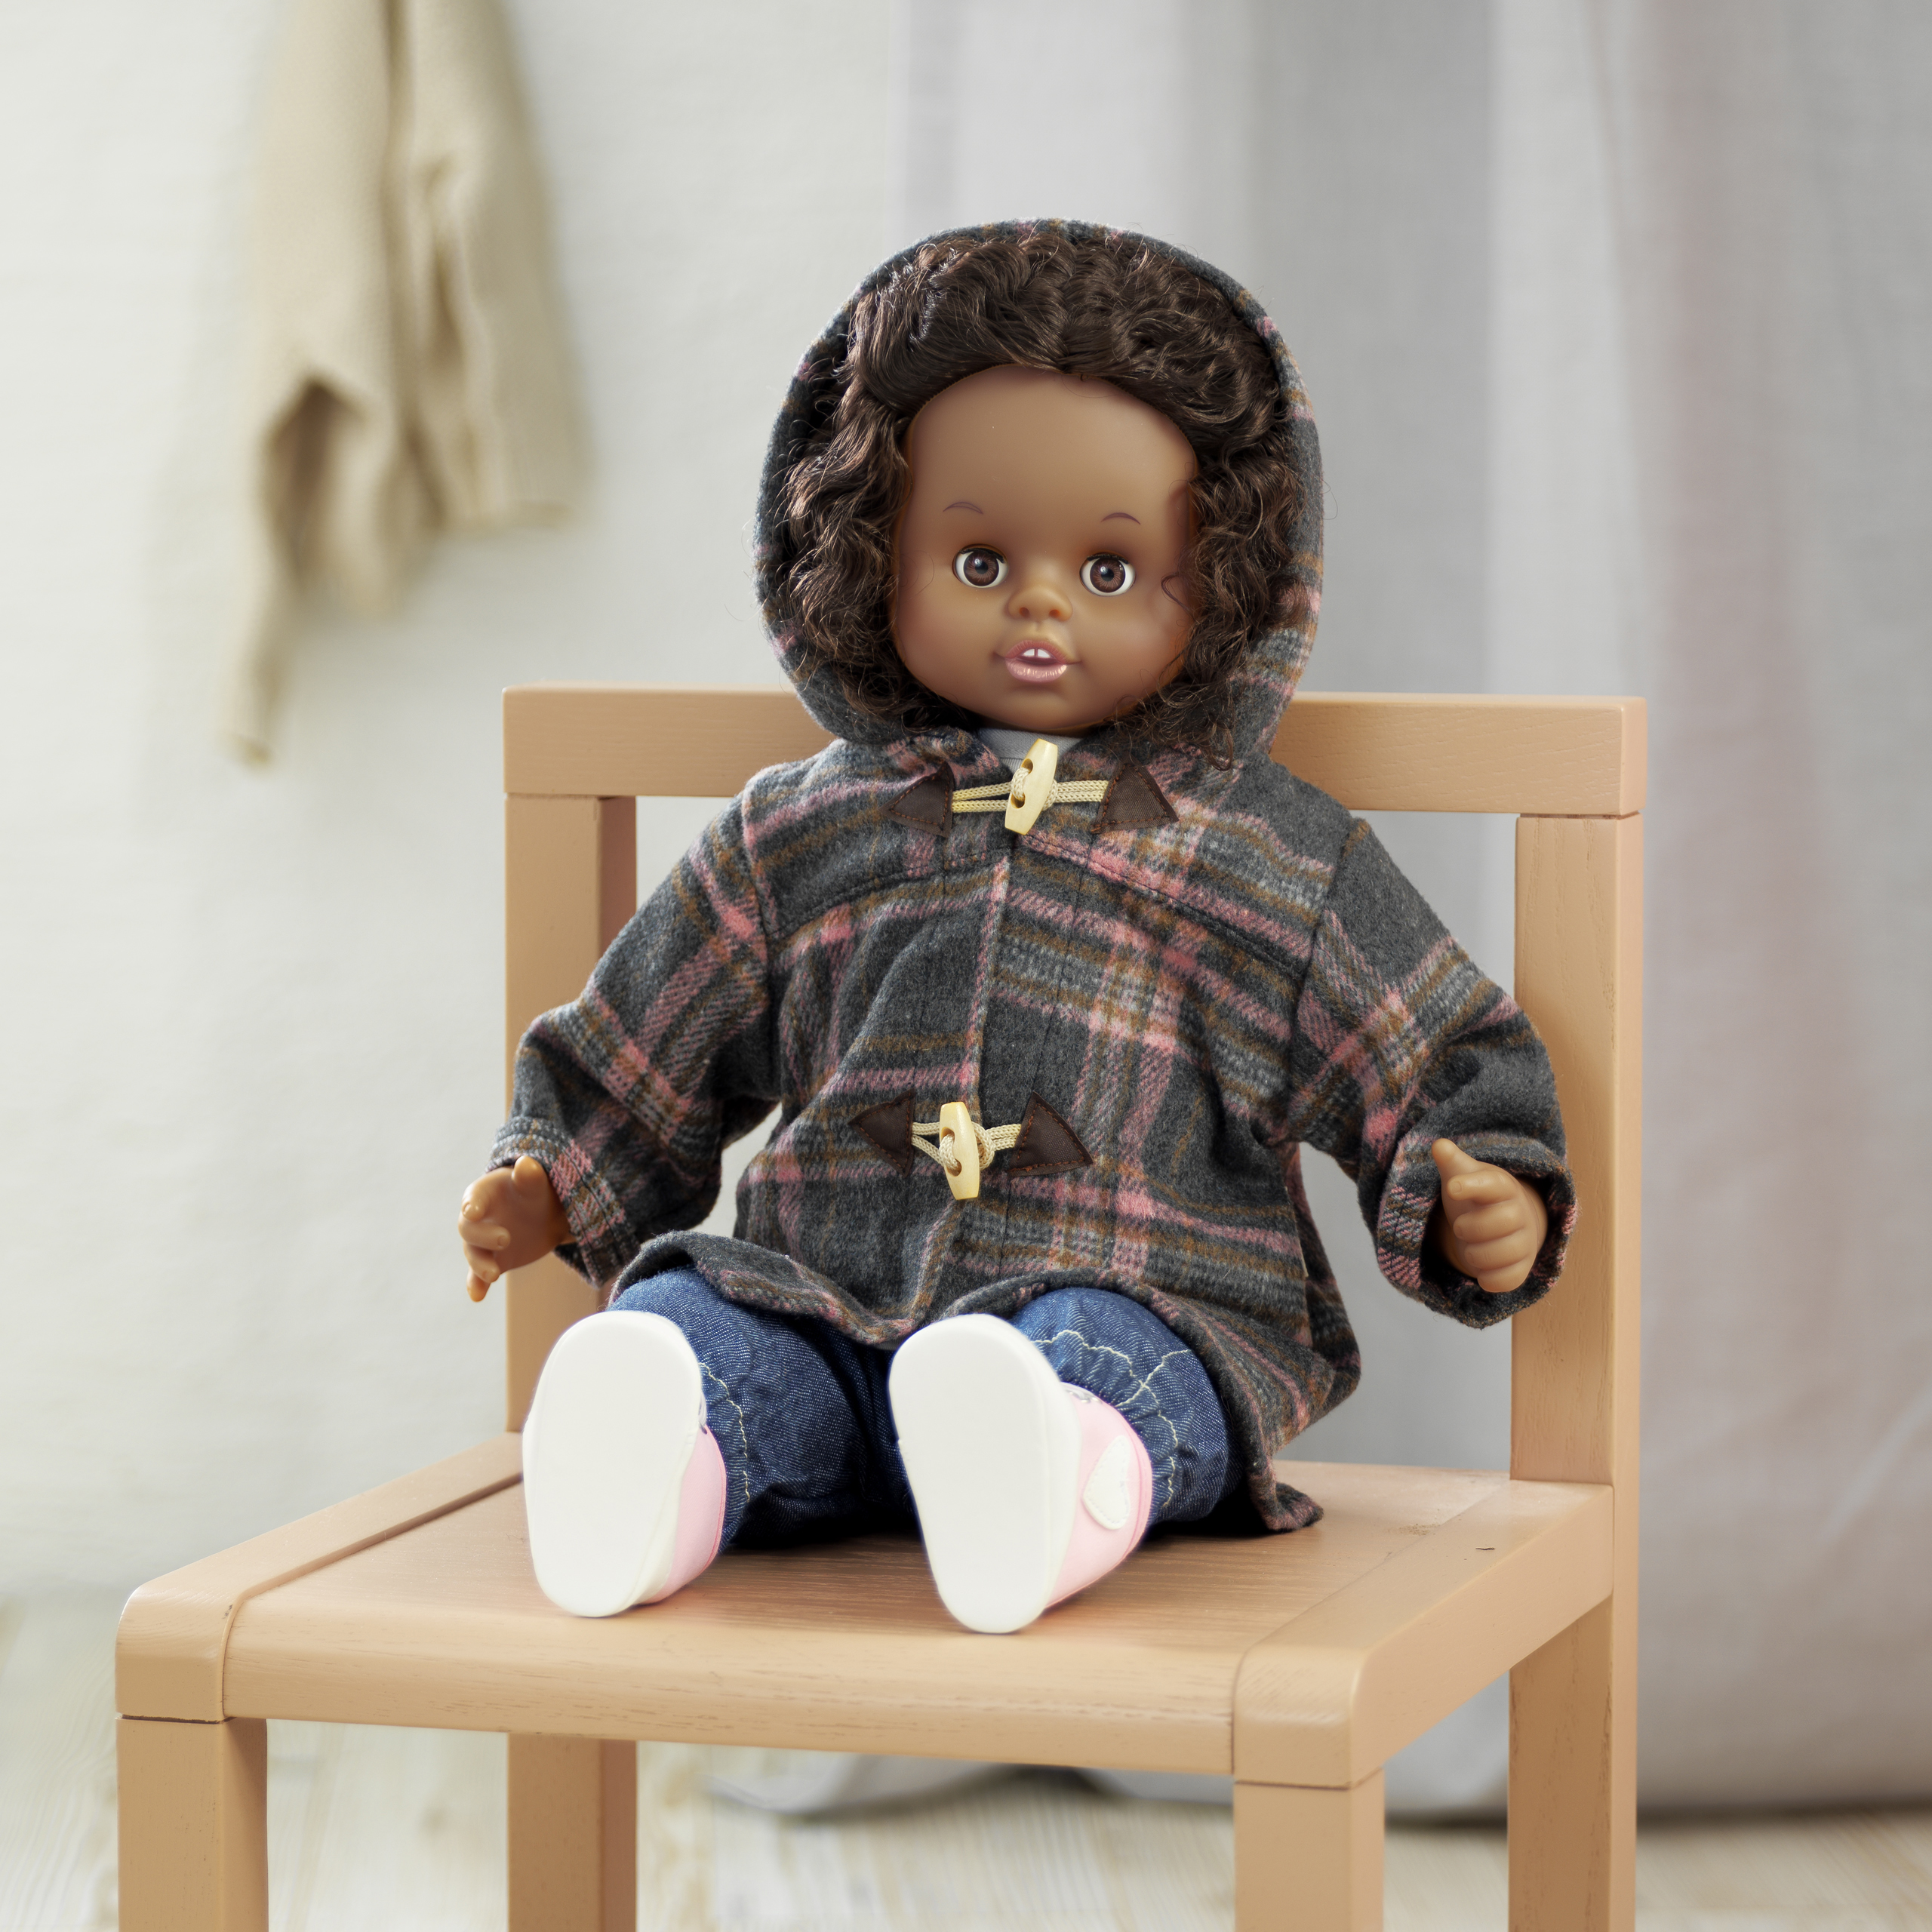 Outlet lundby	doll clothes duffle coat 45 cm